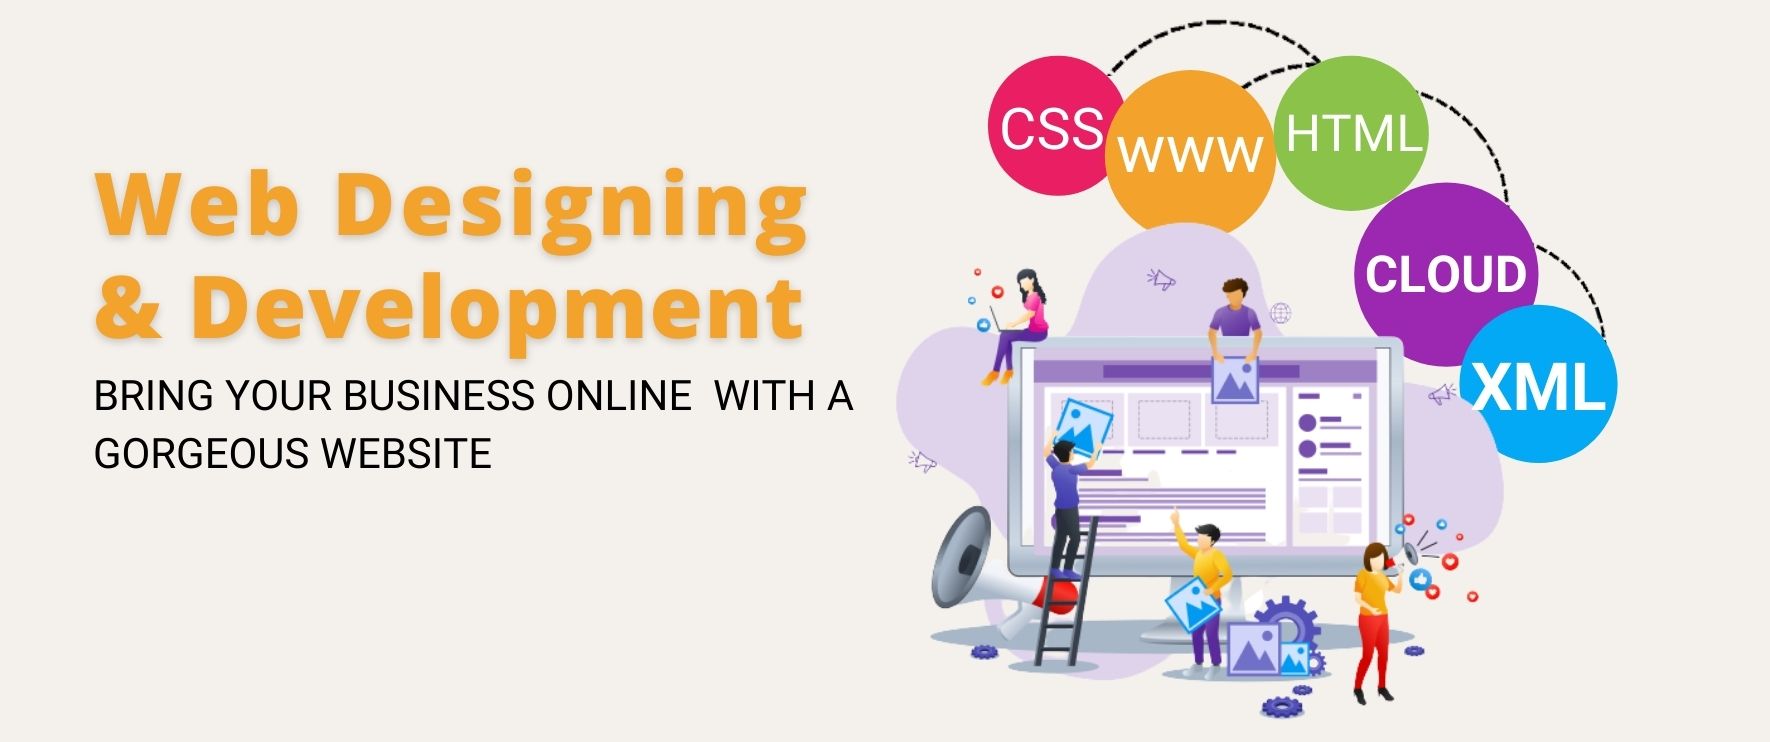 Web Designing & Development Services